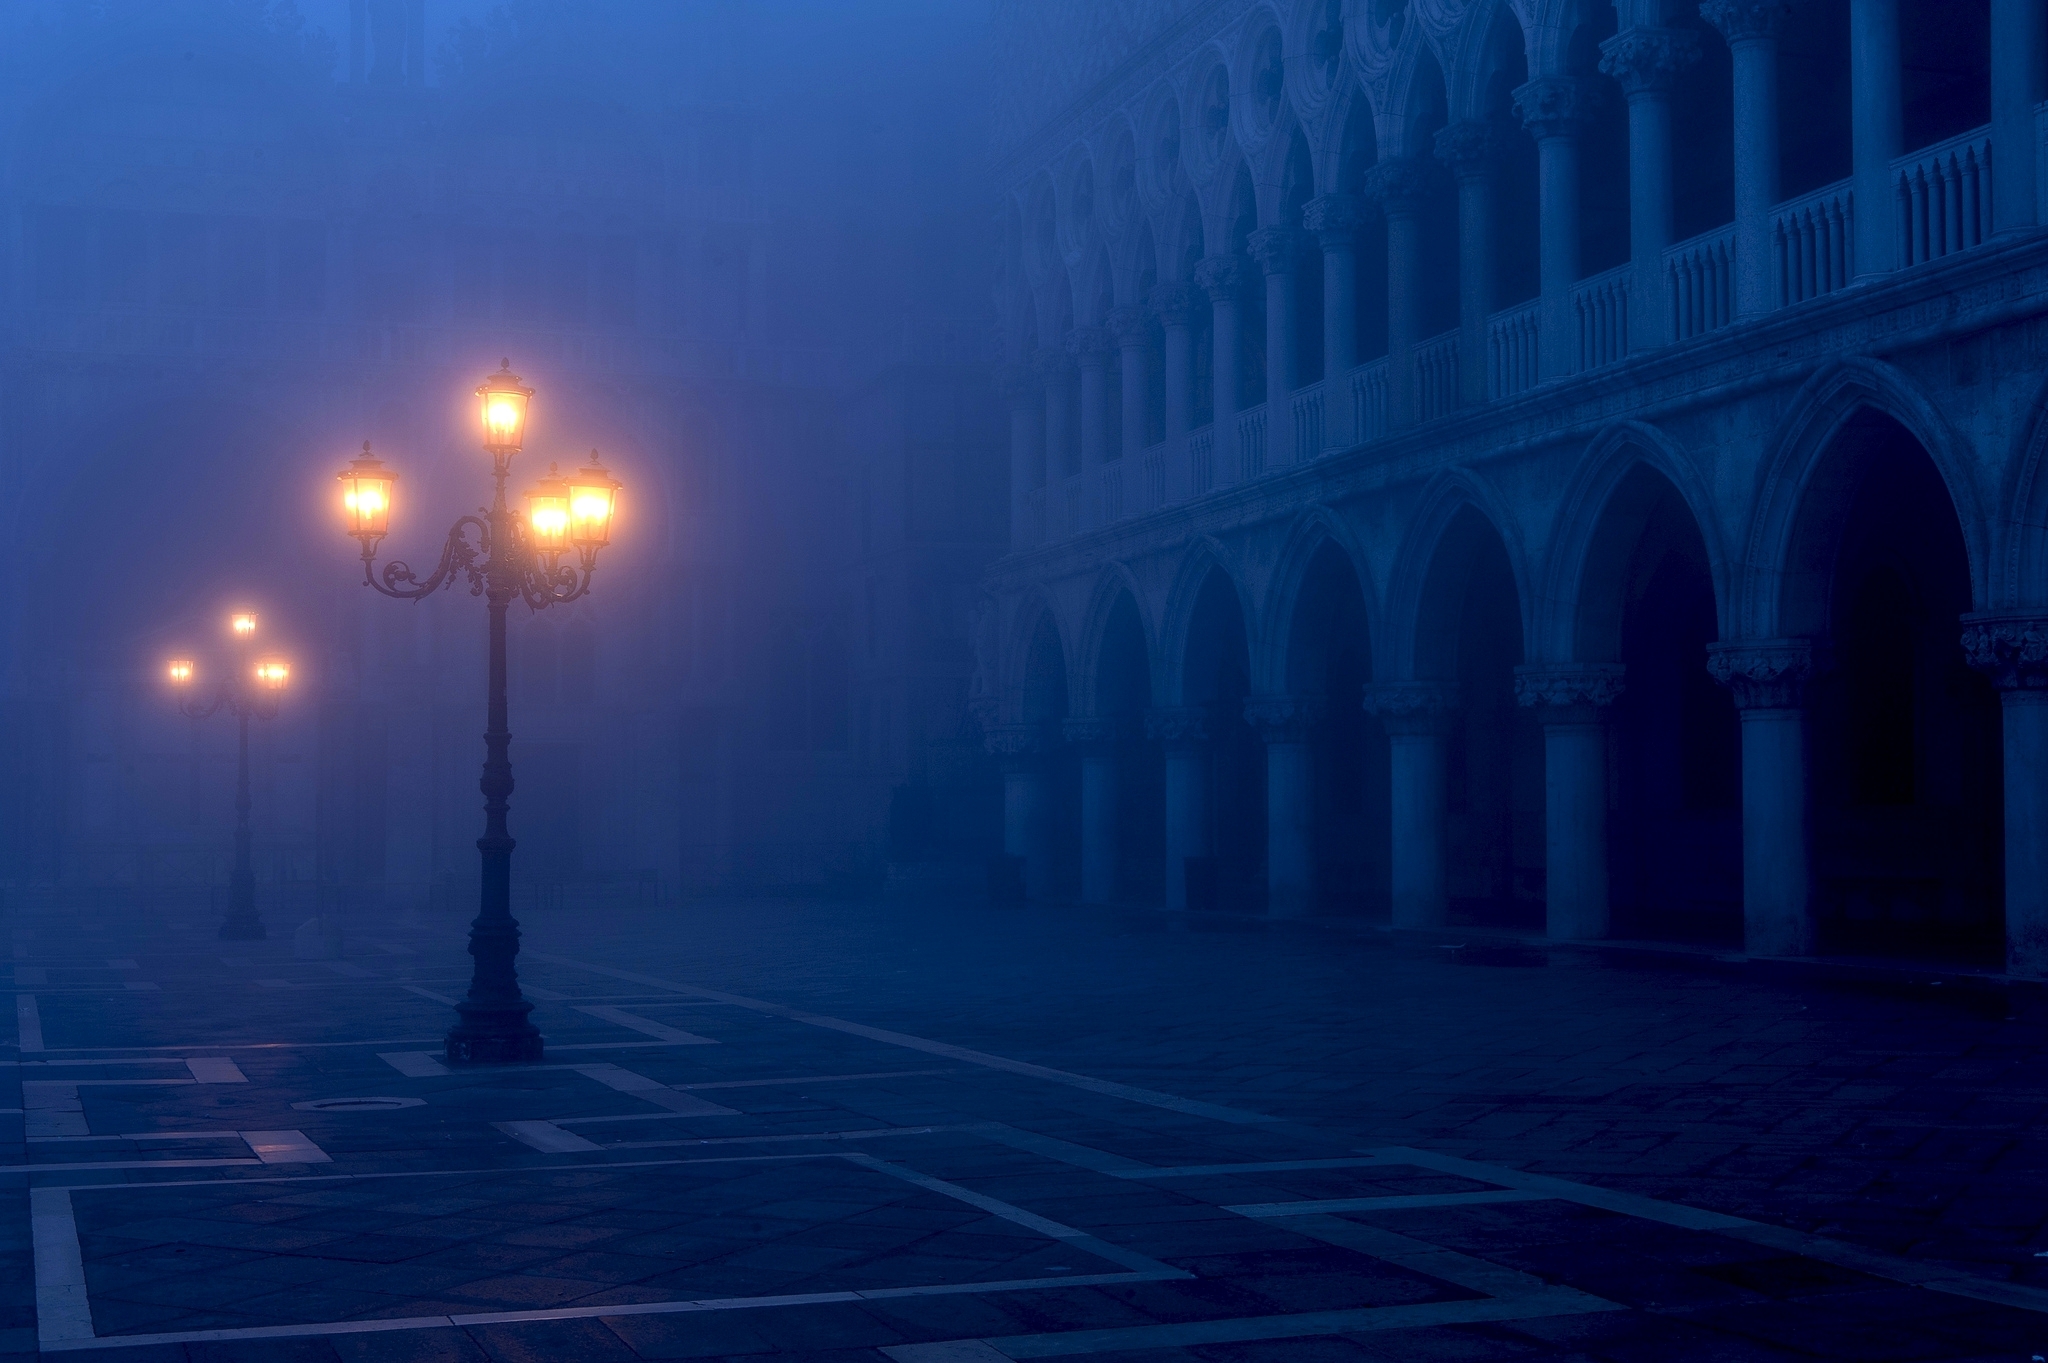 Вечер свет фонаря. Площадь Сан Марко в Венеции в тумане. Ночная улица с фонарями. Ночная улица с фонарями в тумане. Темная улица с фонарями.